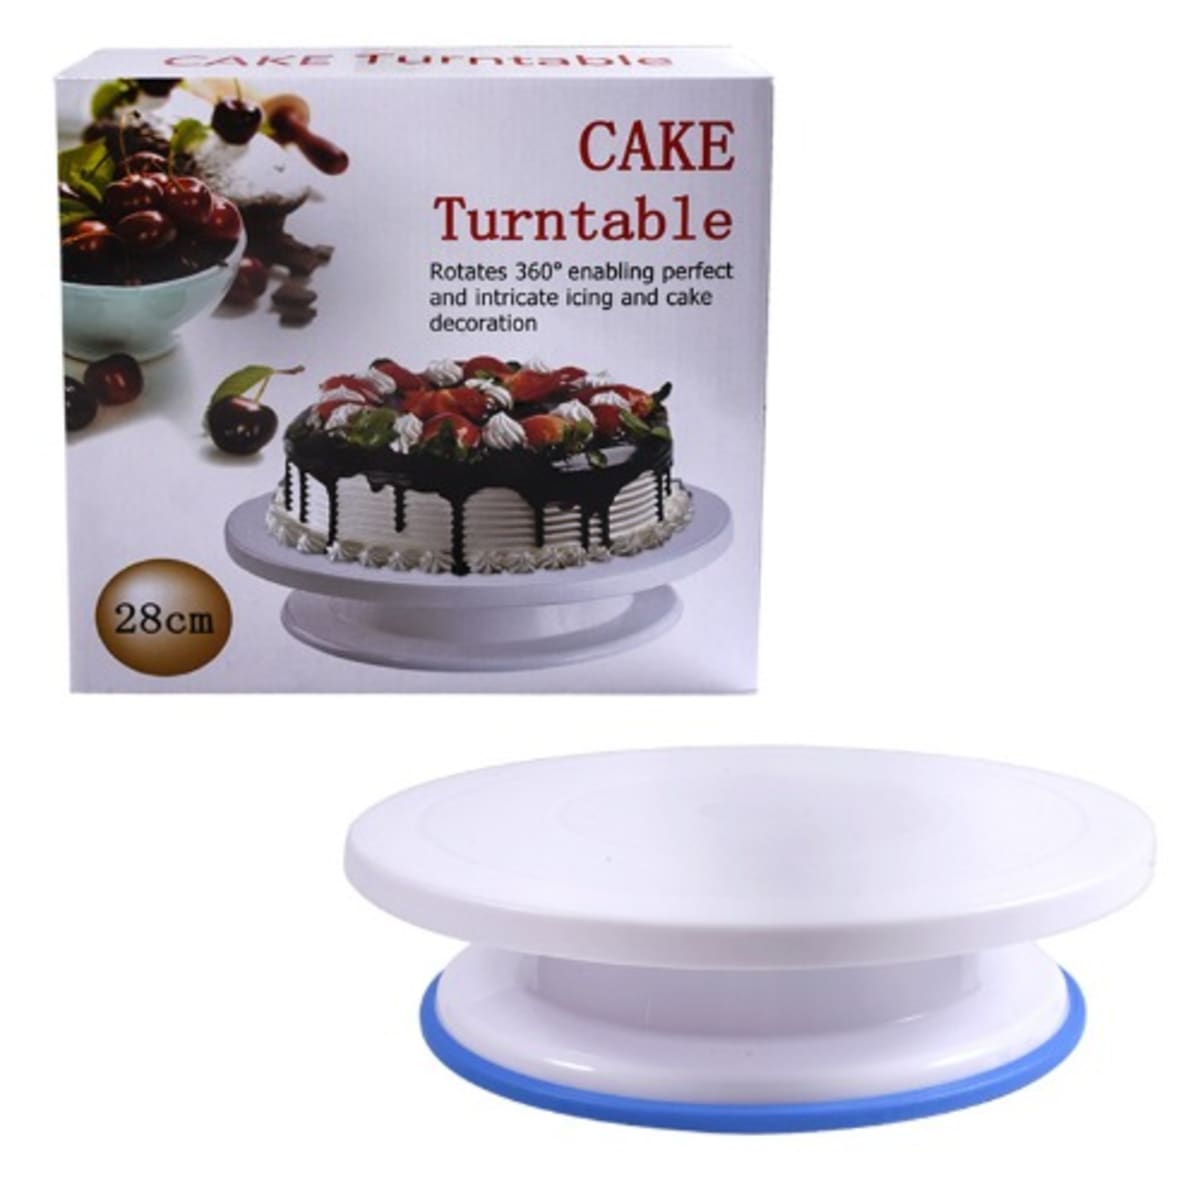 Cake Turning Table - 28cm